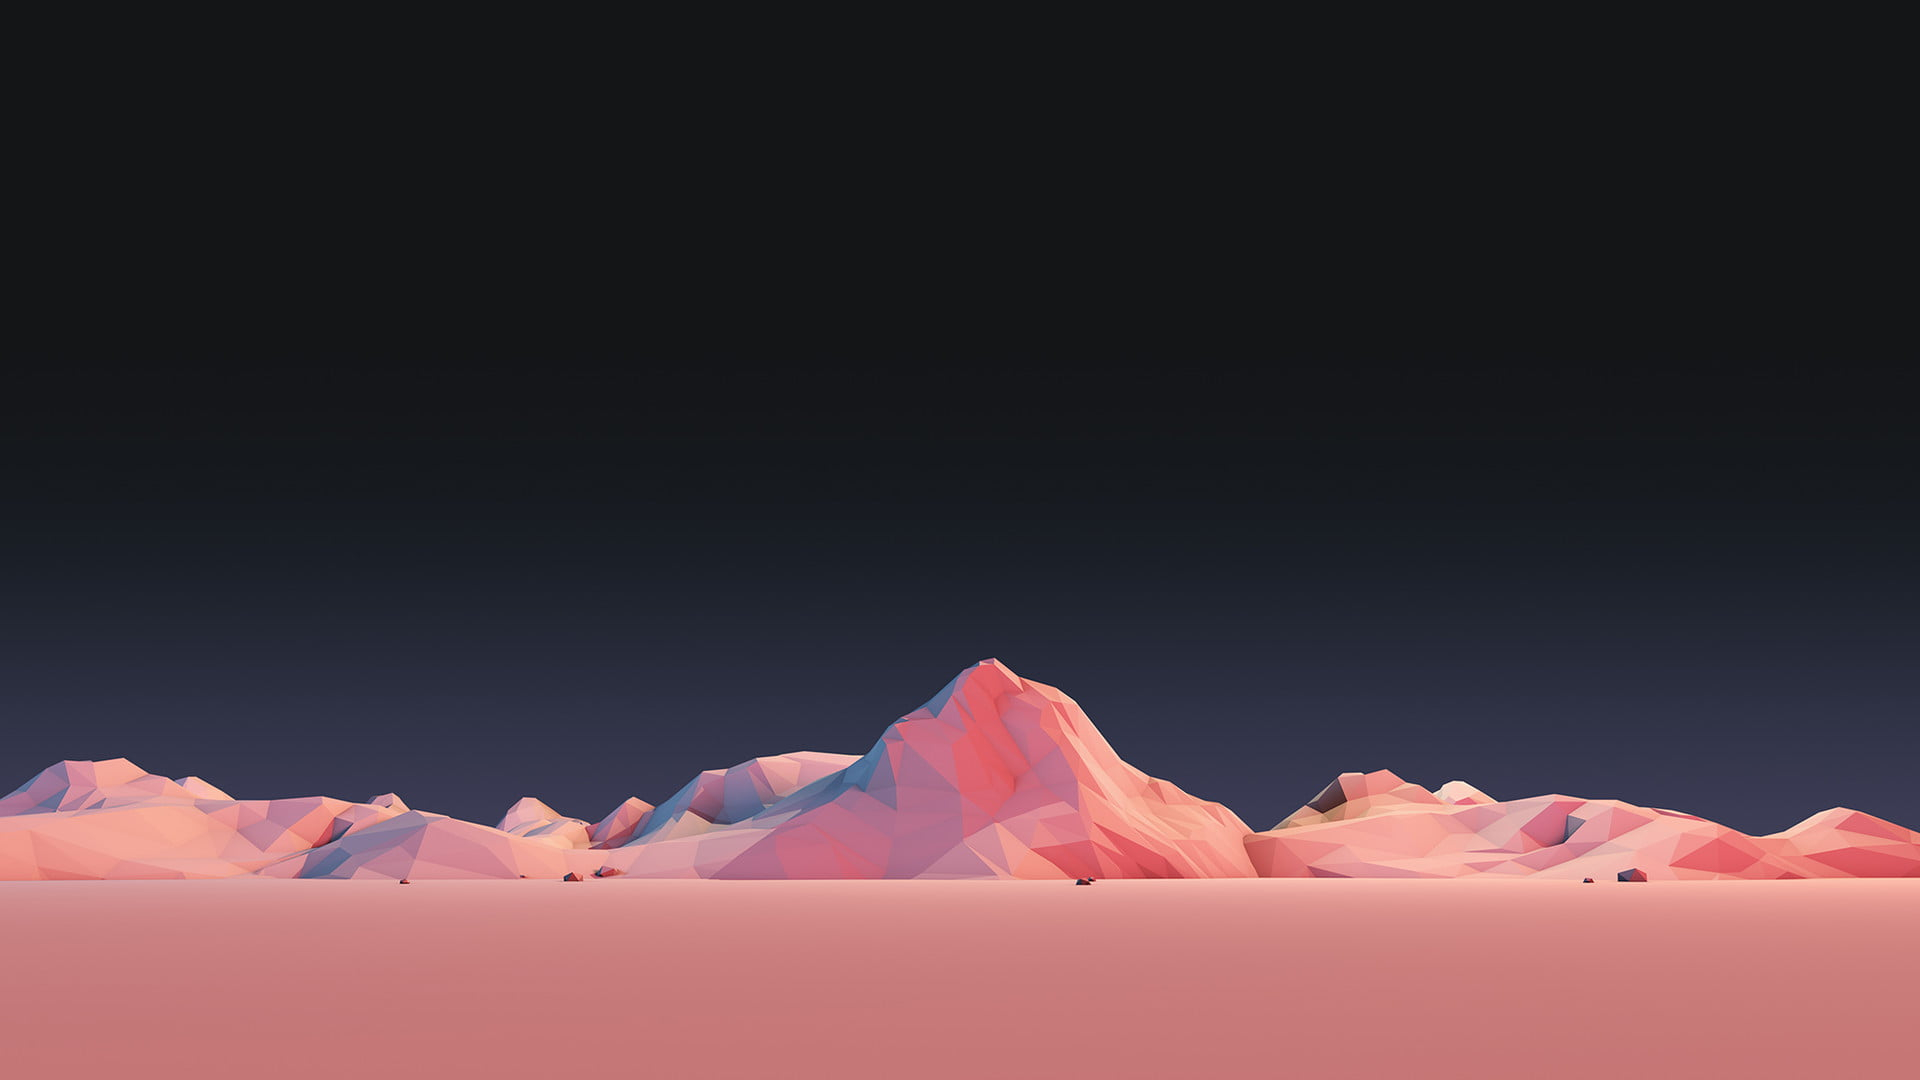 Pink mountain terrain wallpaper, illustration, mountains, low poly, minimalism